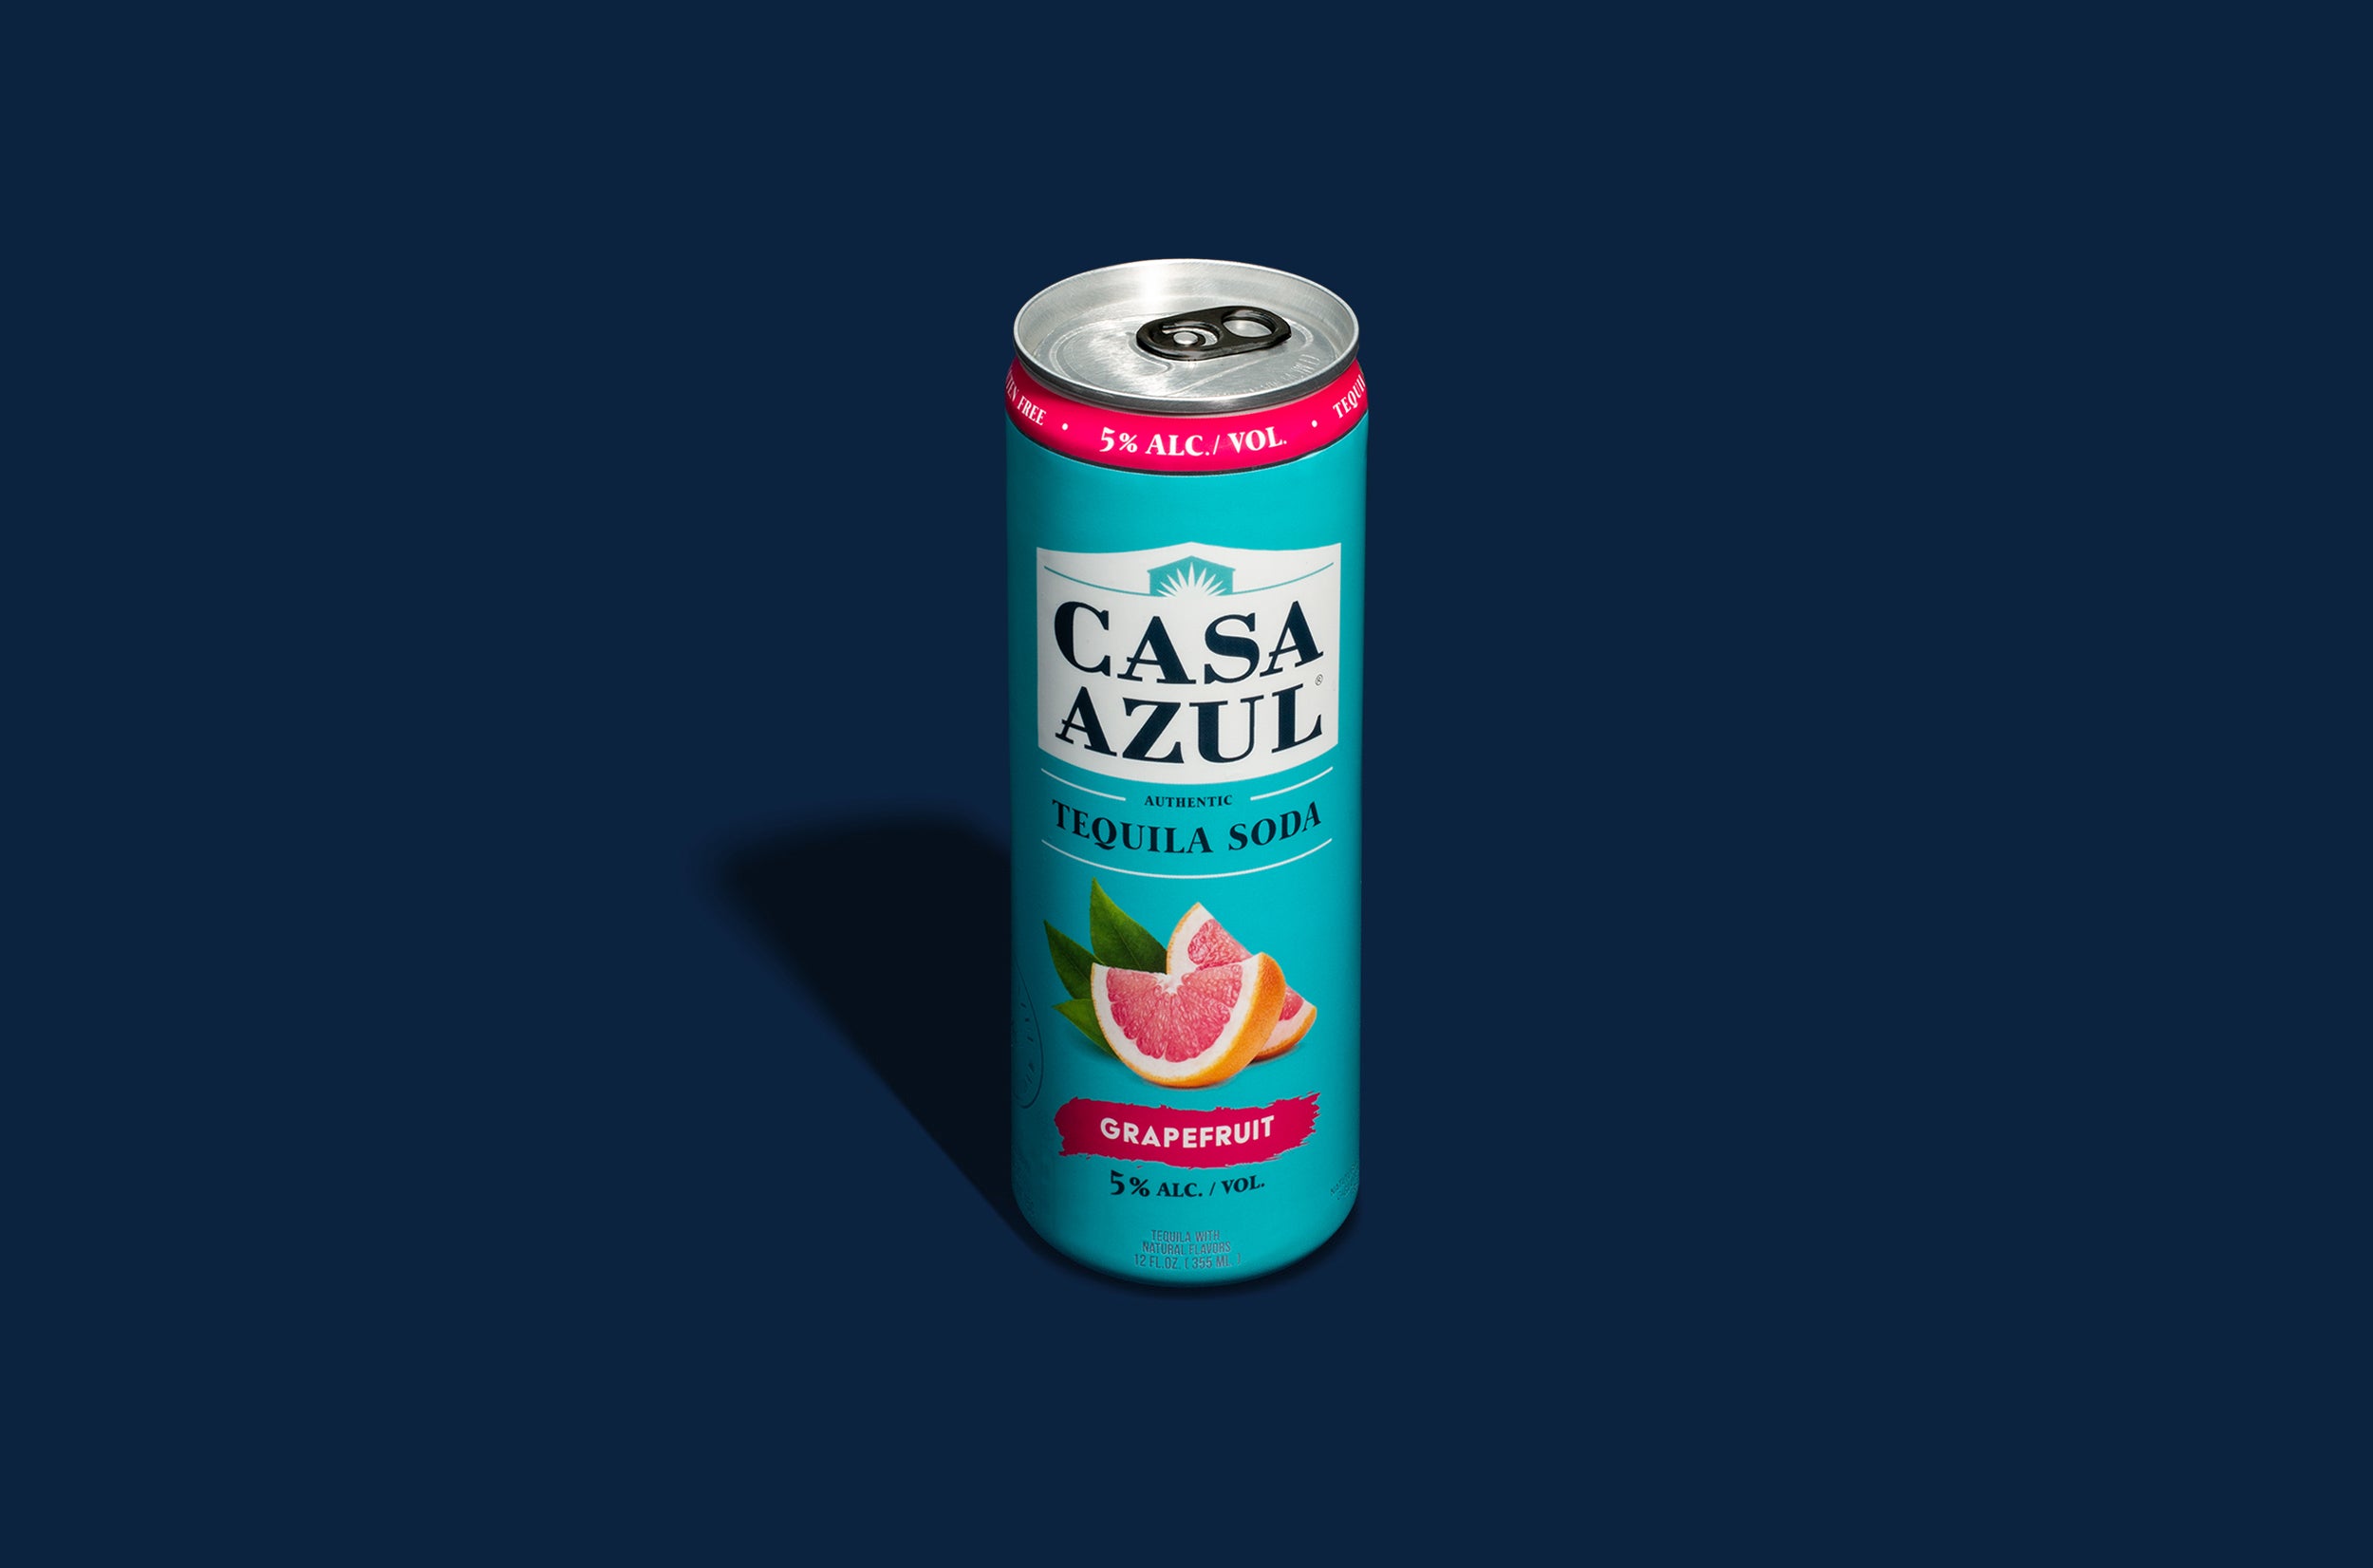 Casa azul grapefruit tequila soda light blue can on navy blue background